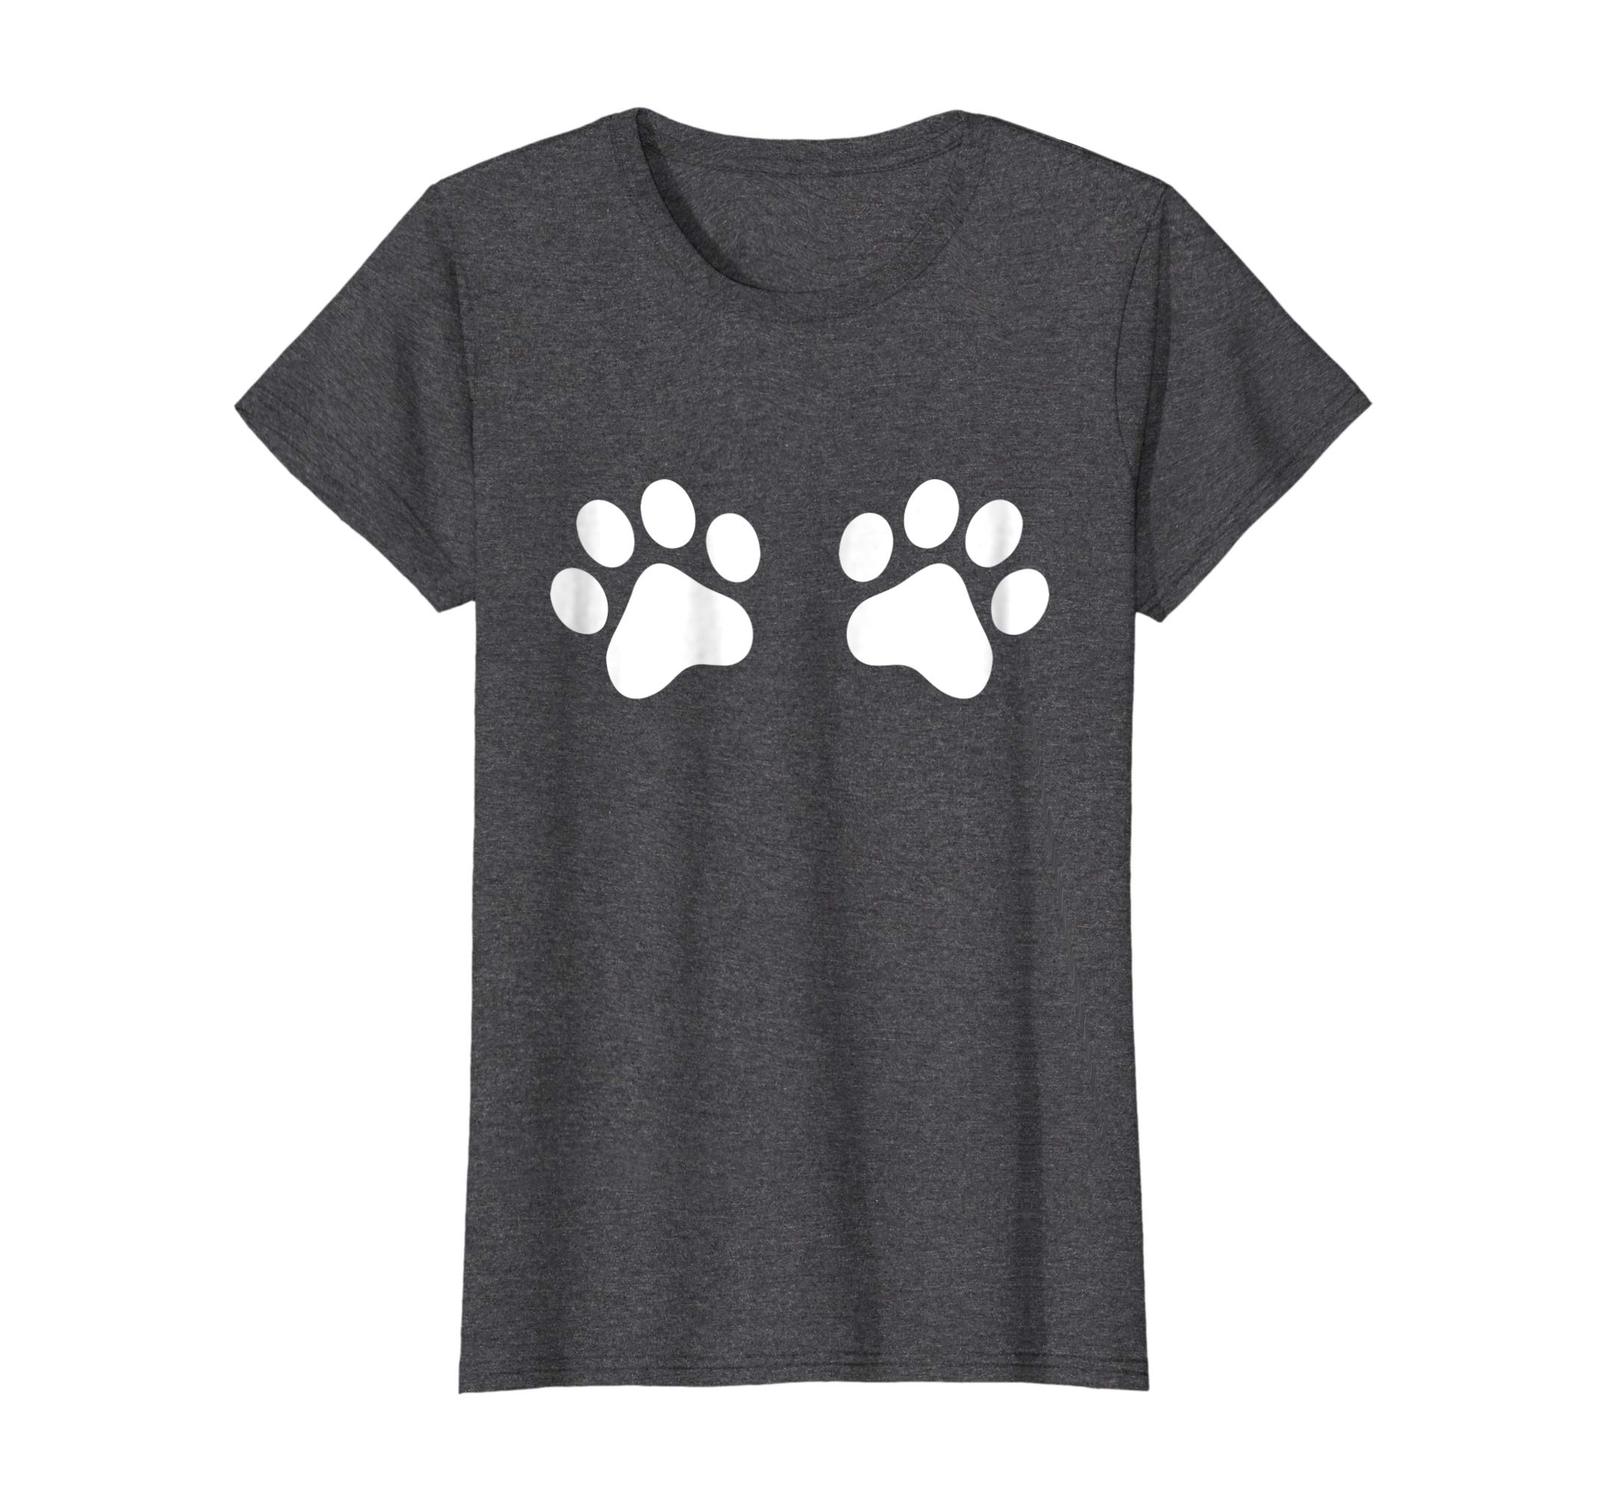 Dog Fashion - Dog Lover Shirt Funny Dog Boobs Puppy Dogs Paws Bra Tee Wowen